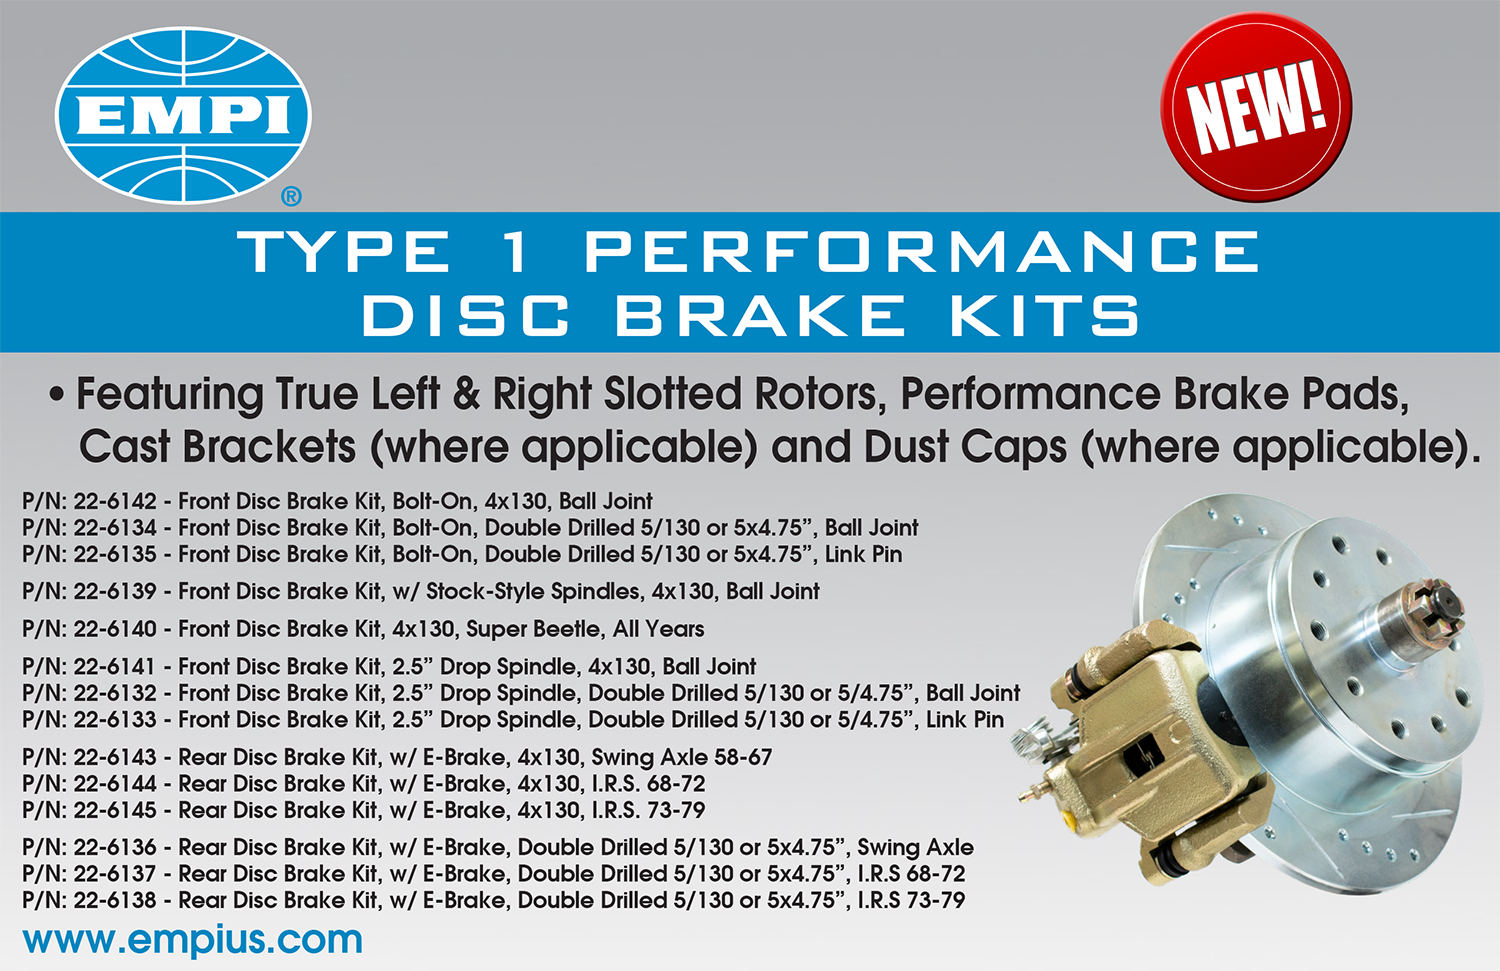 Performance Brake Kits